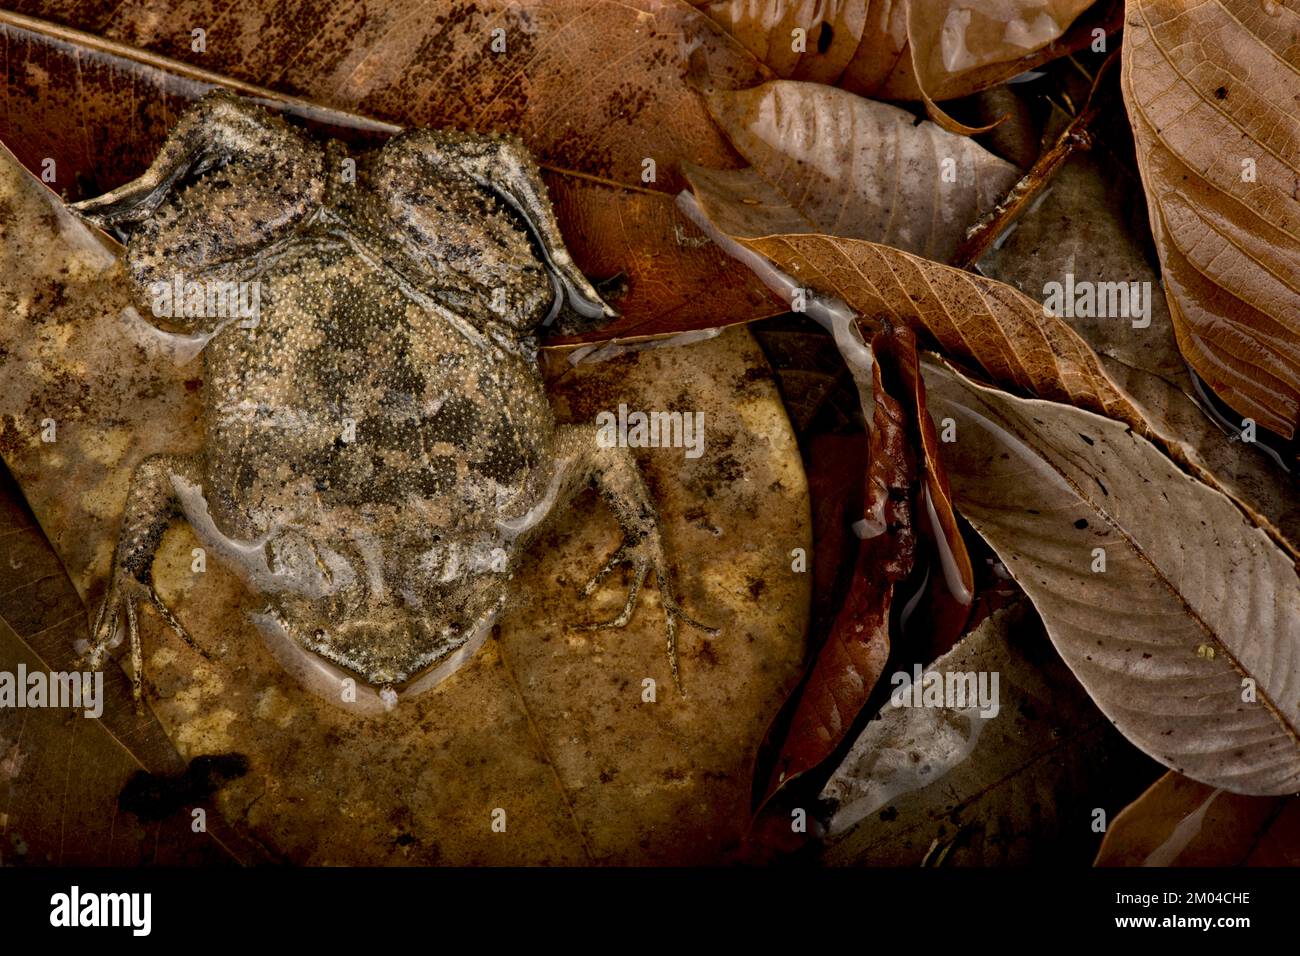 Suriname toad (Pipa pipa) Stock Photo